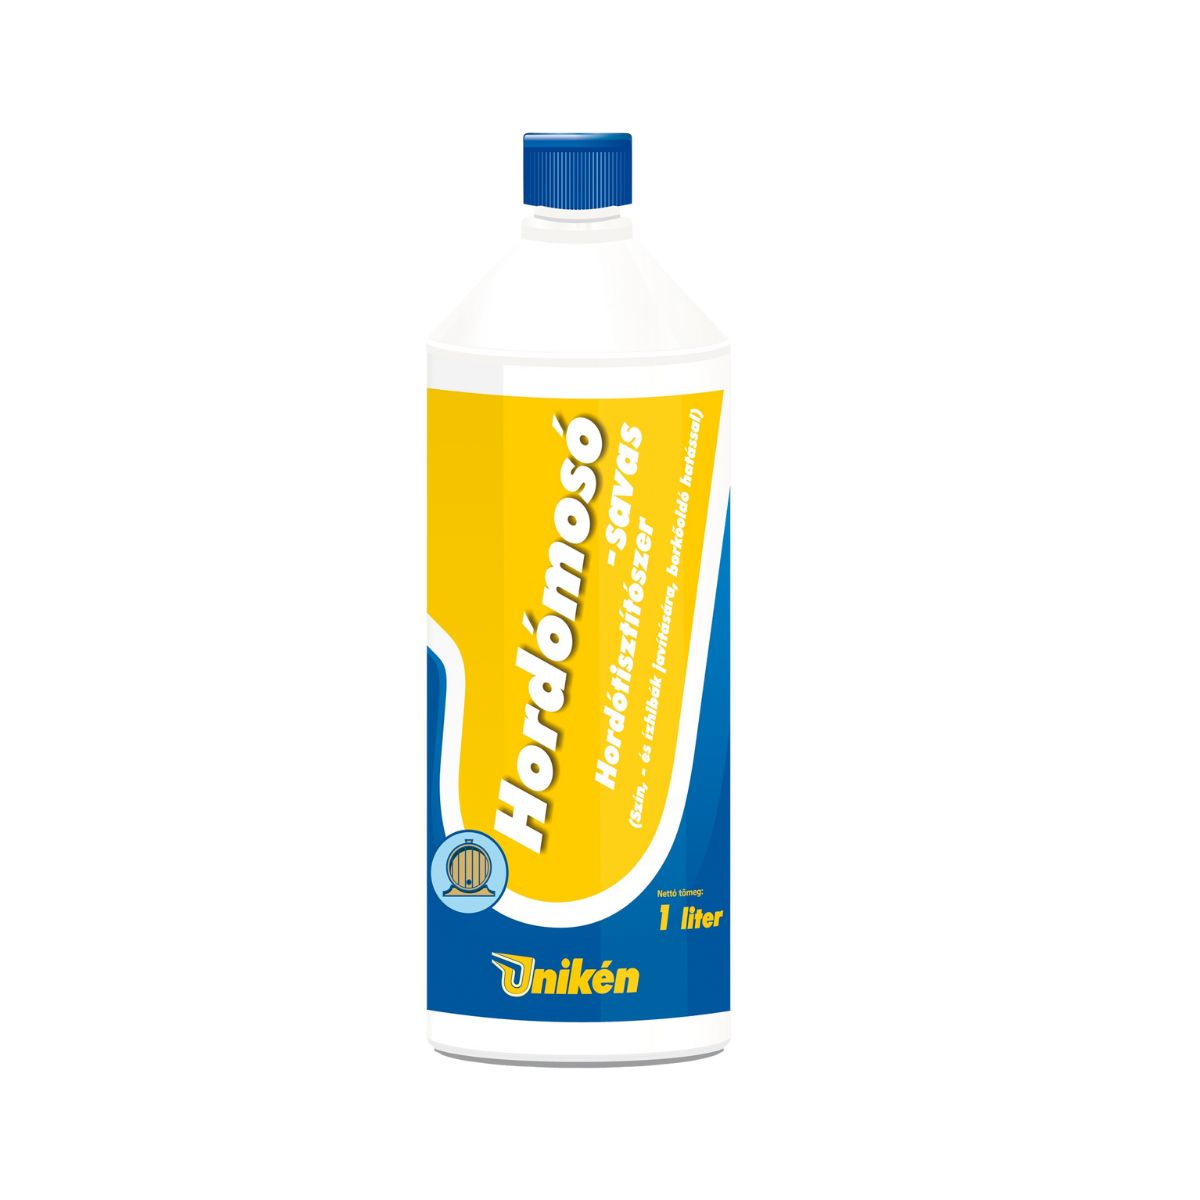 Vinificatie (Oenologie) - Detergent acid pentru butoaie, 1 kilogram, hectarul.ro